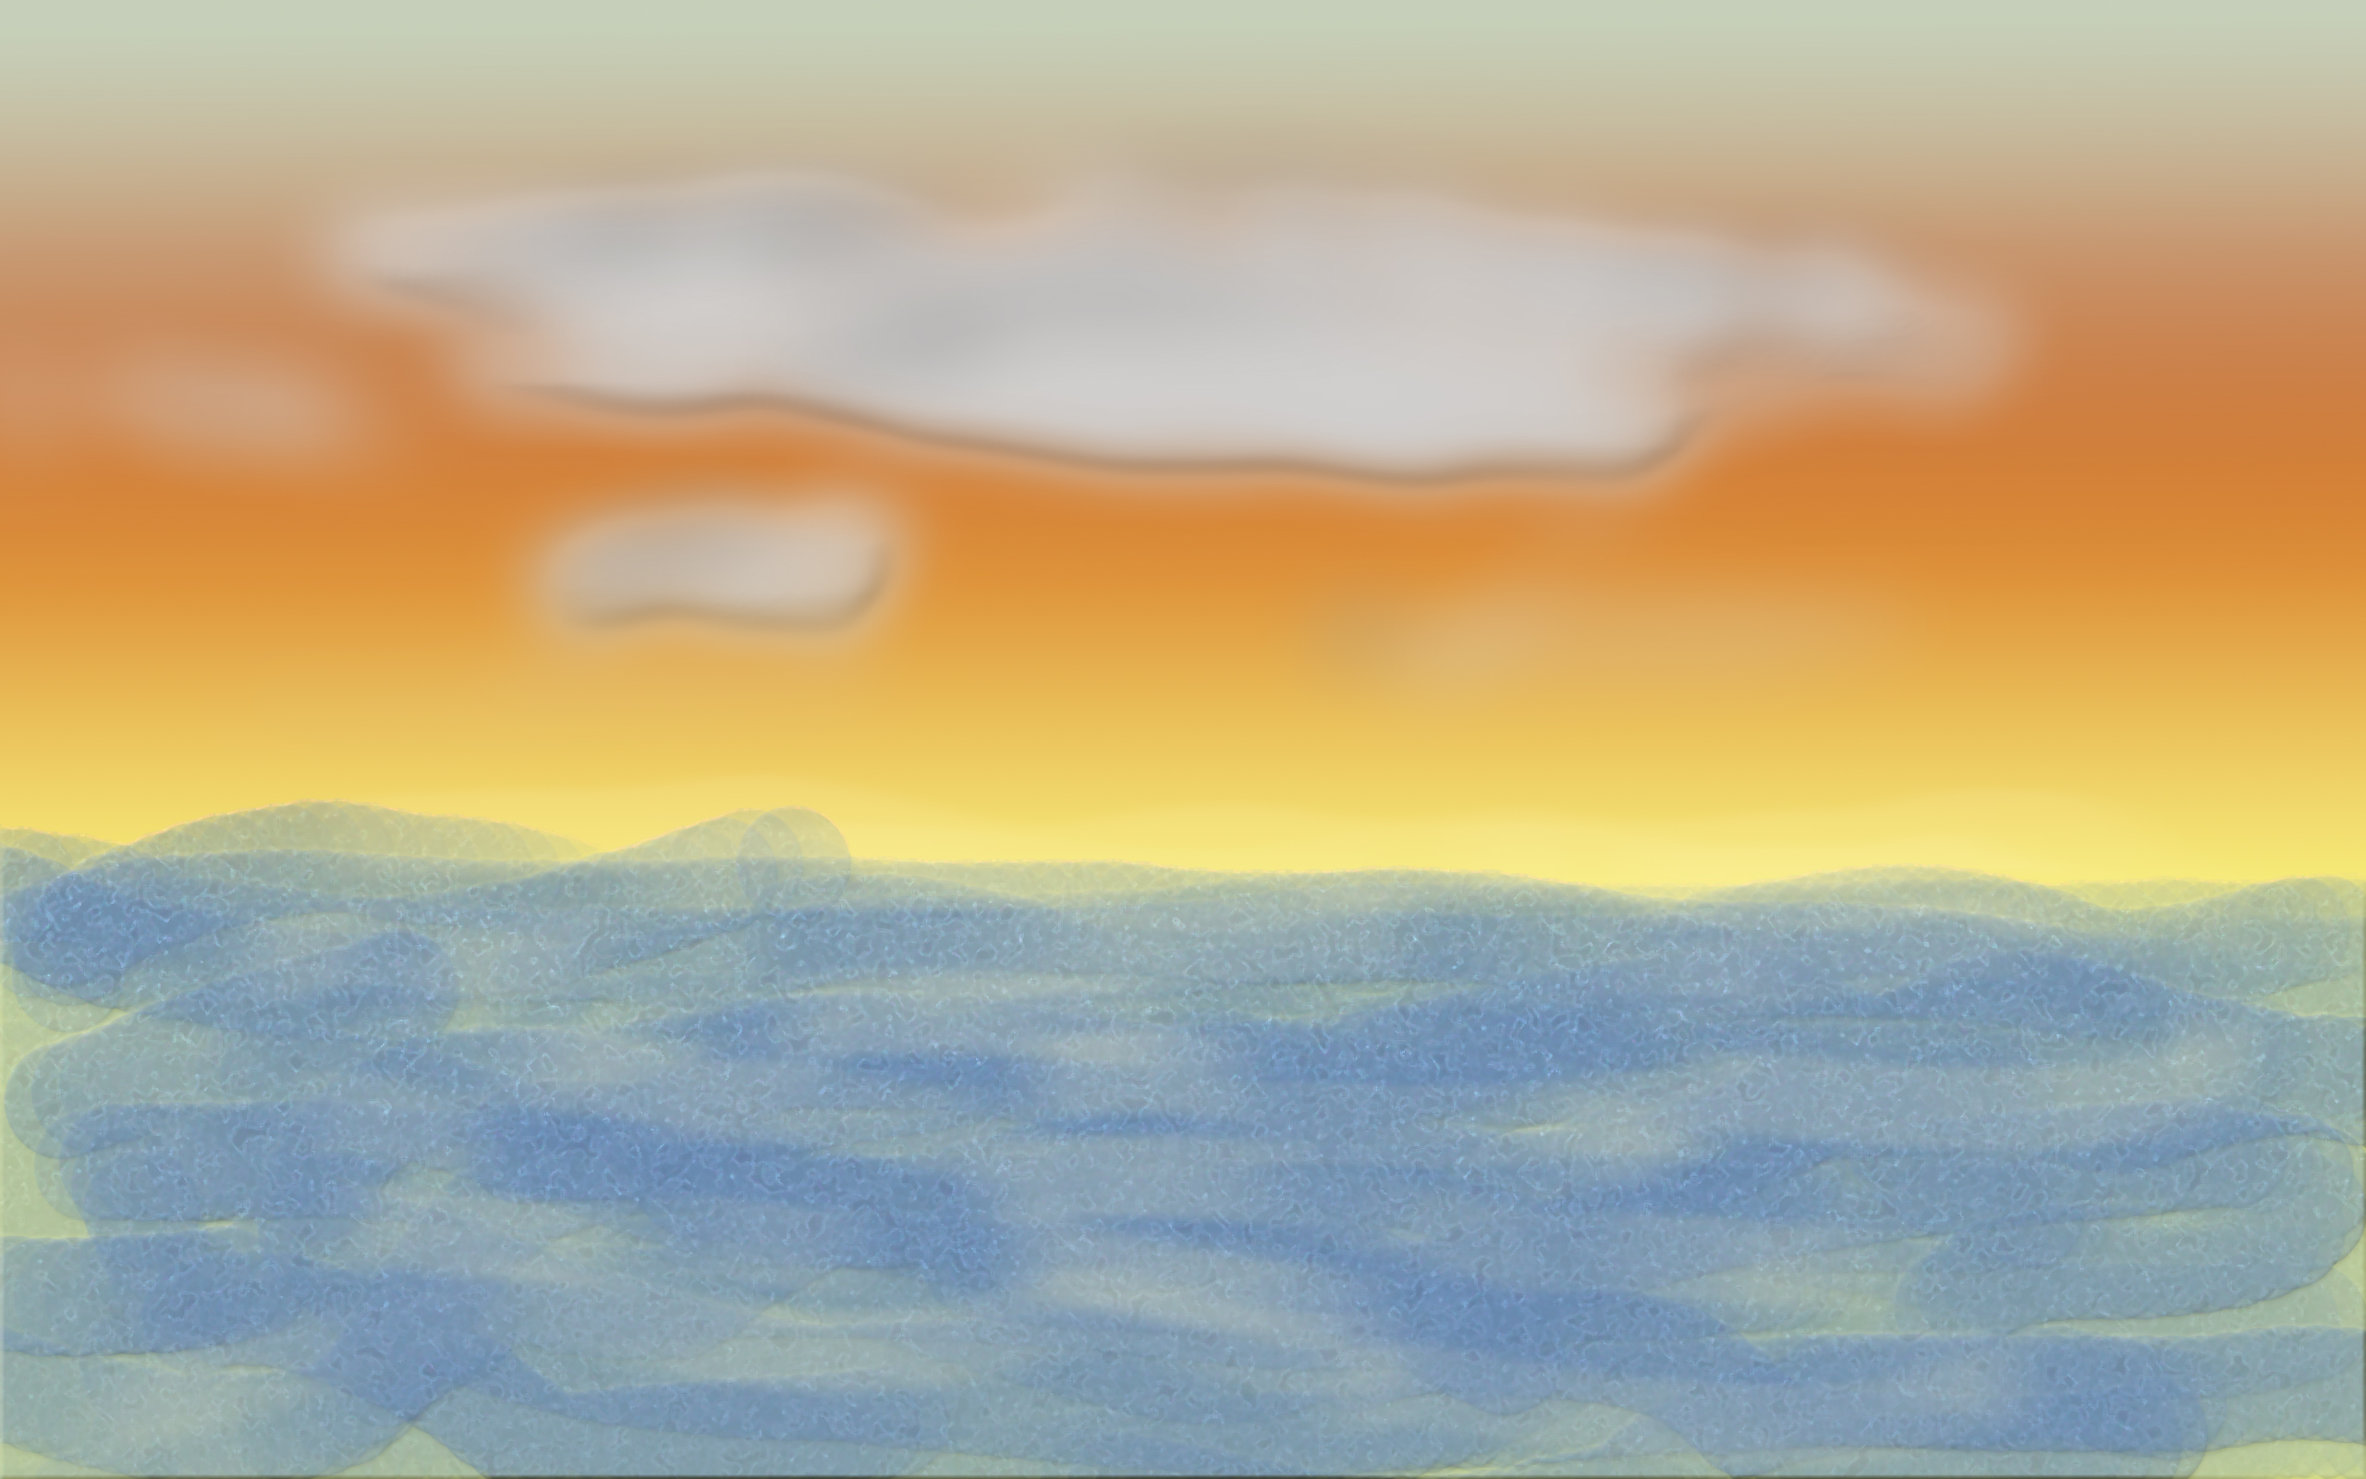 Ocean Wallpaper By 8166uy